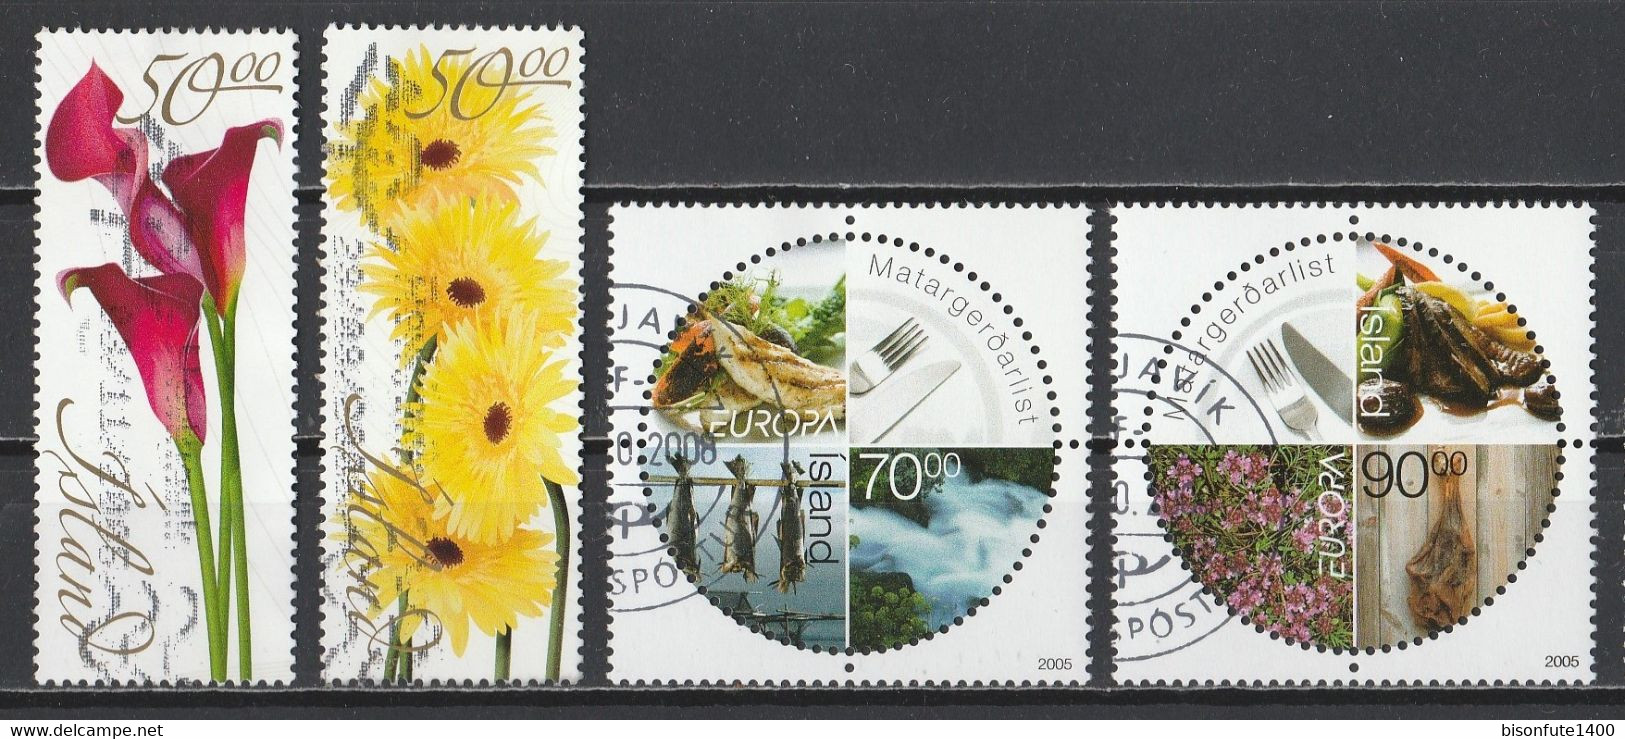 Islande 2005 : Timbres Yvert & Tellier N° 1017 - 1018 - 1030 - 1031 - 1038 Et 1041 Oblitérés. - Used Stamps